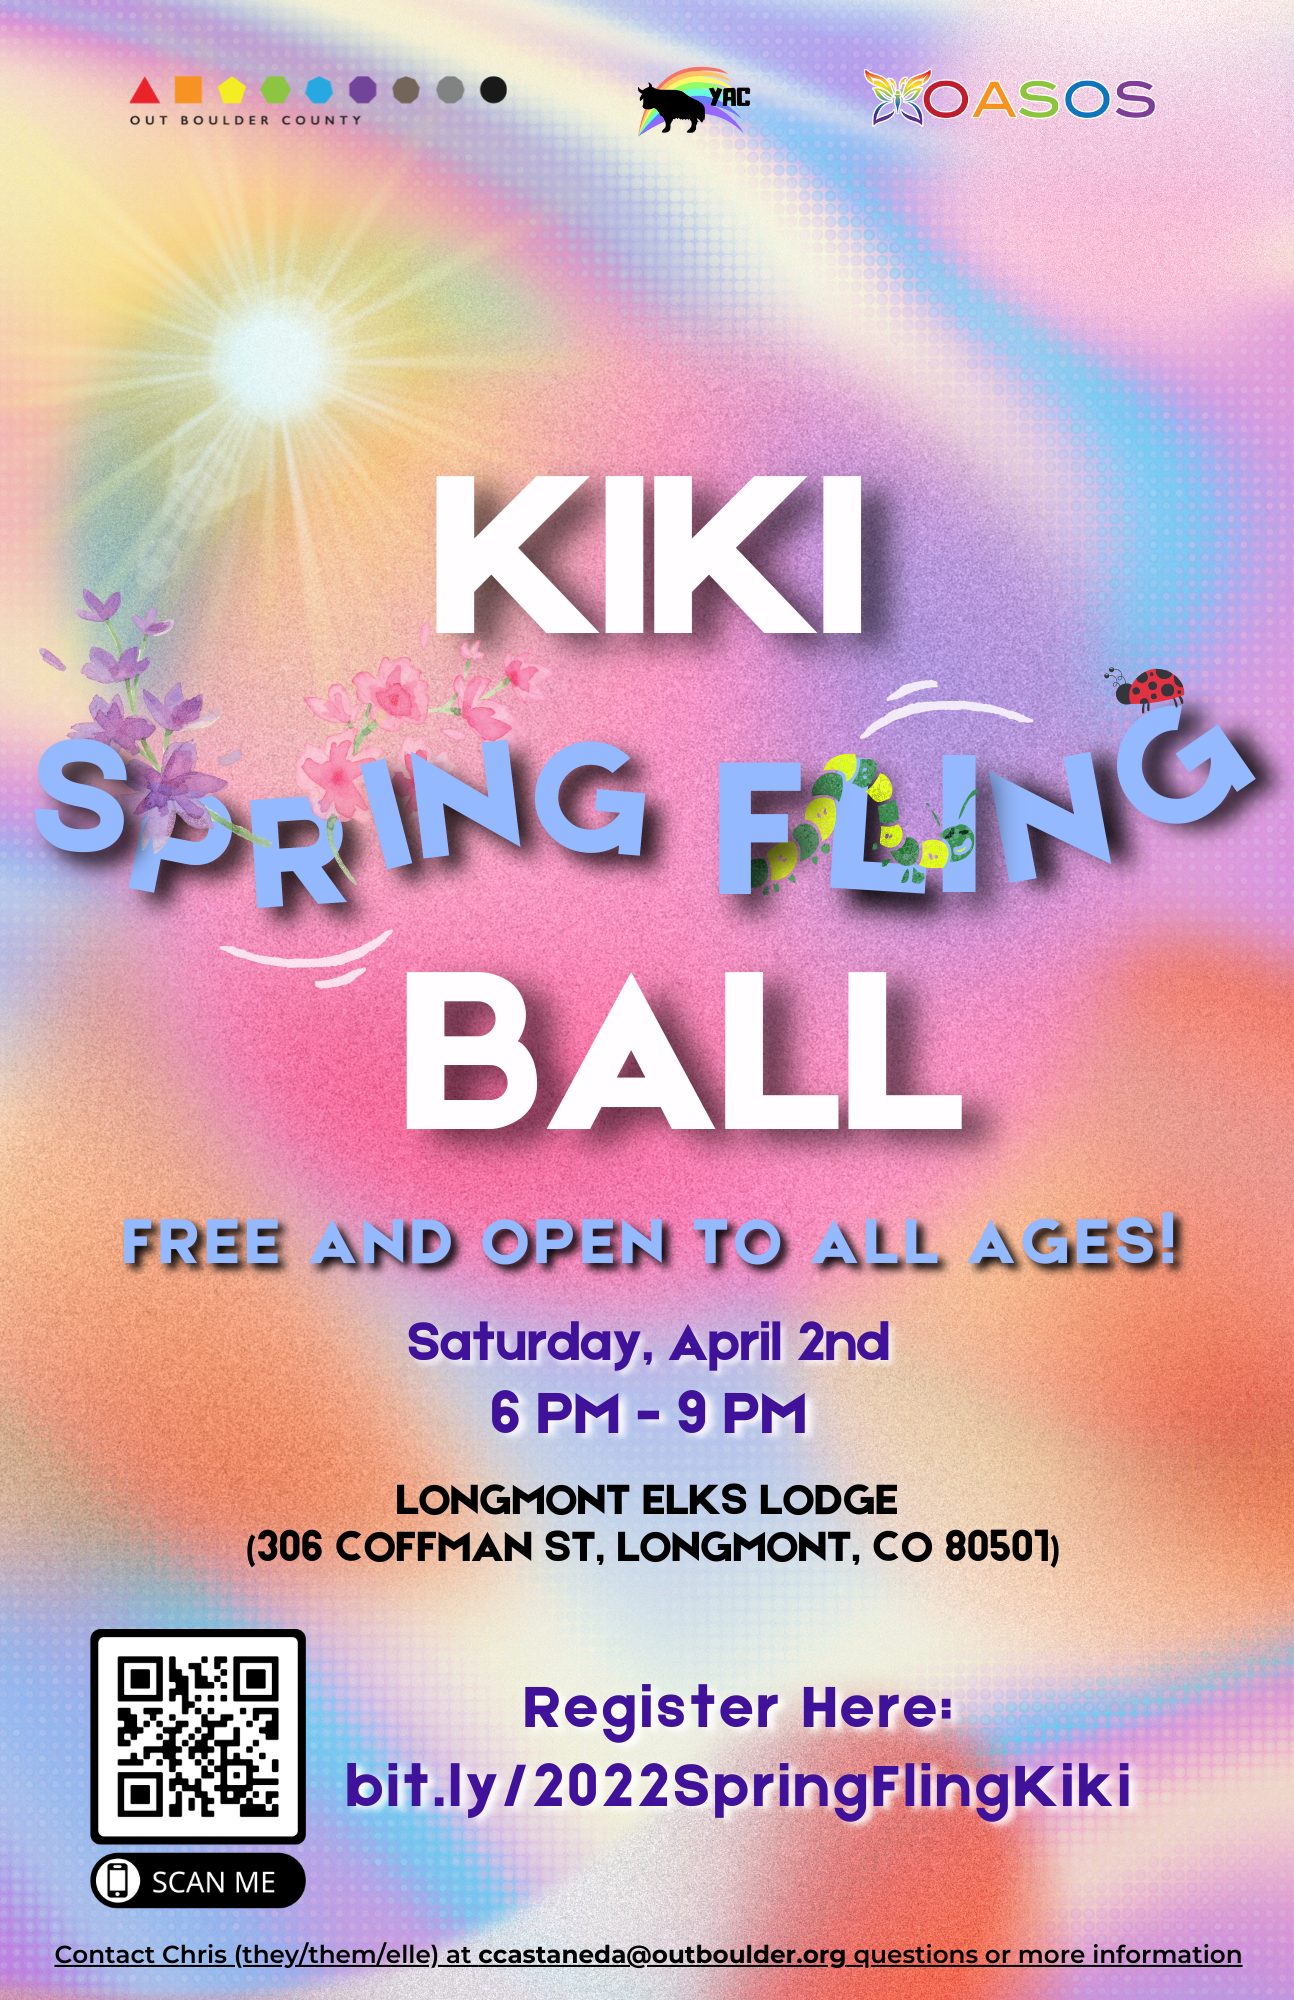 First ever Kiki Ball brings ballroom scene to Longmont